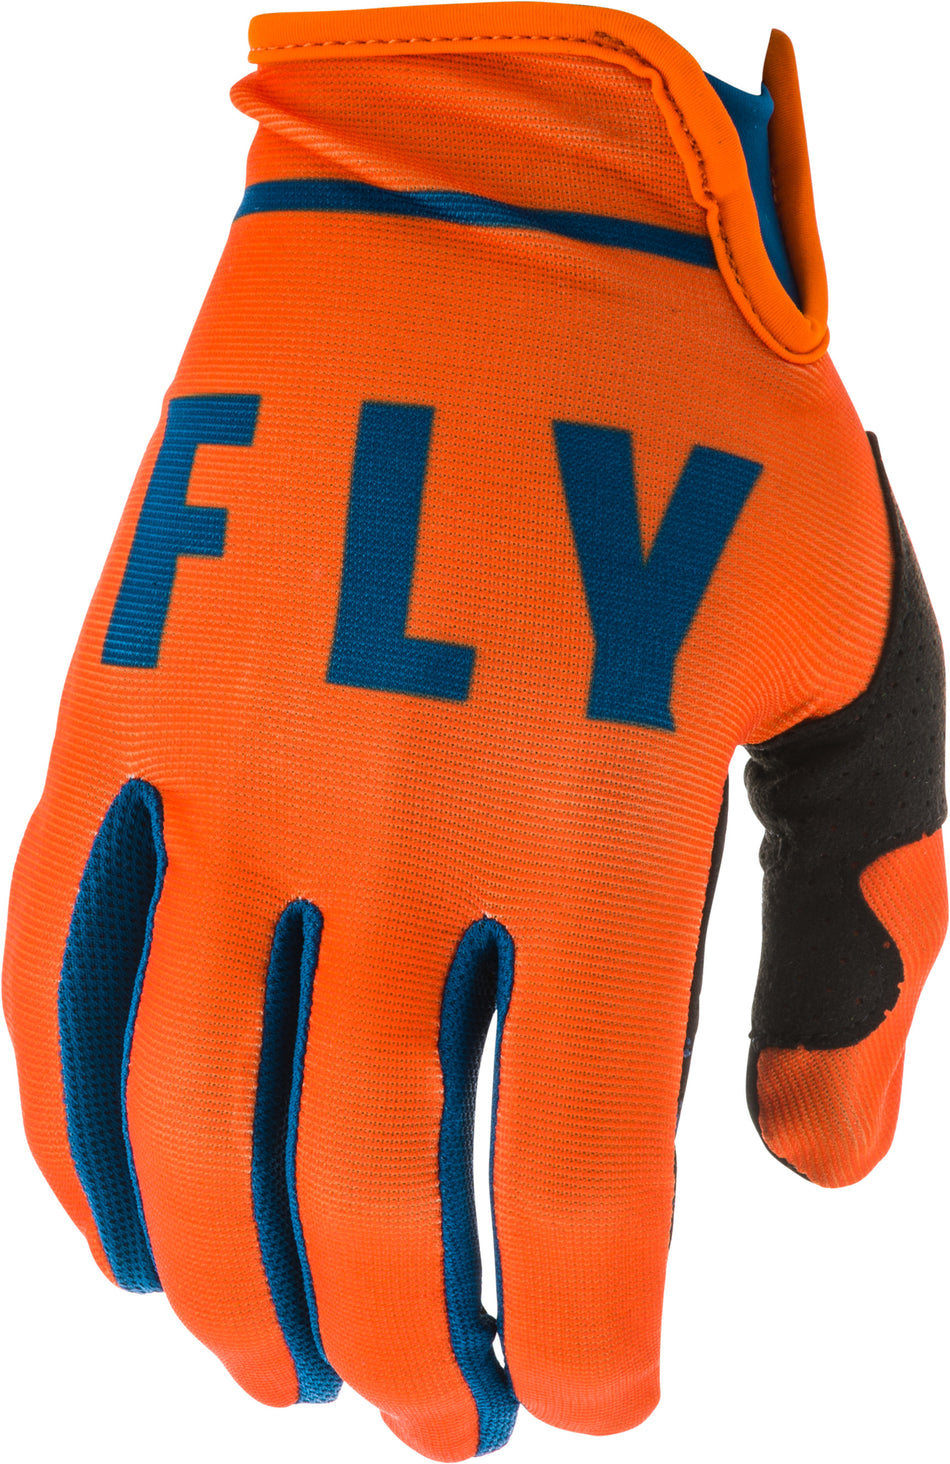 FLY RACING Lite Gloves Orange/Navy Sz 10 373-71310